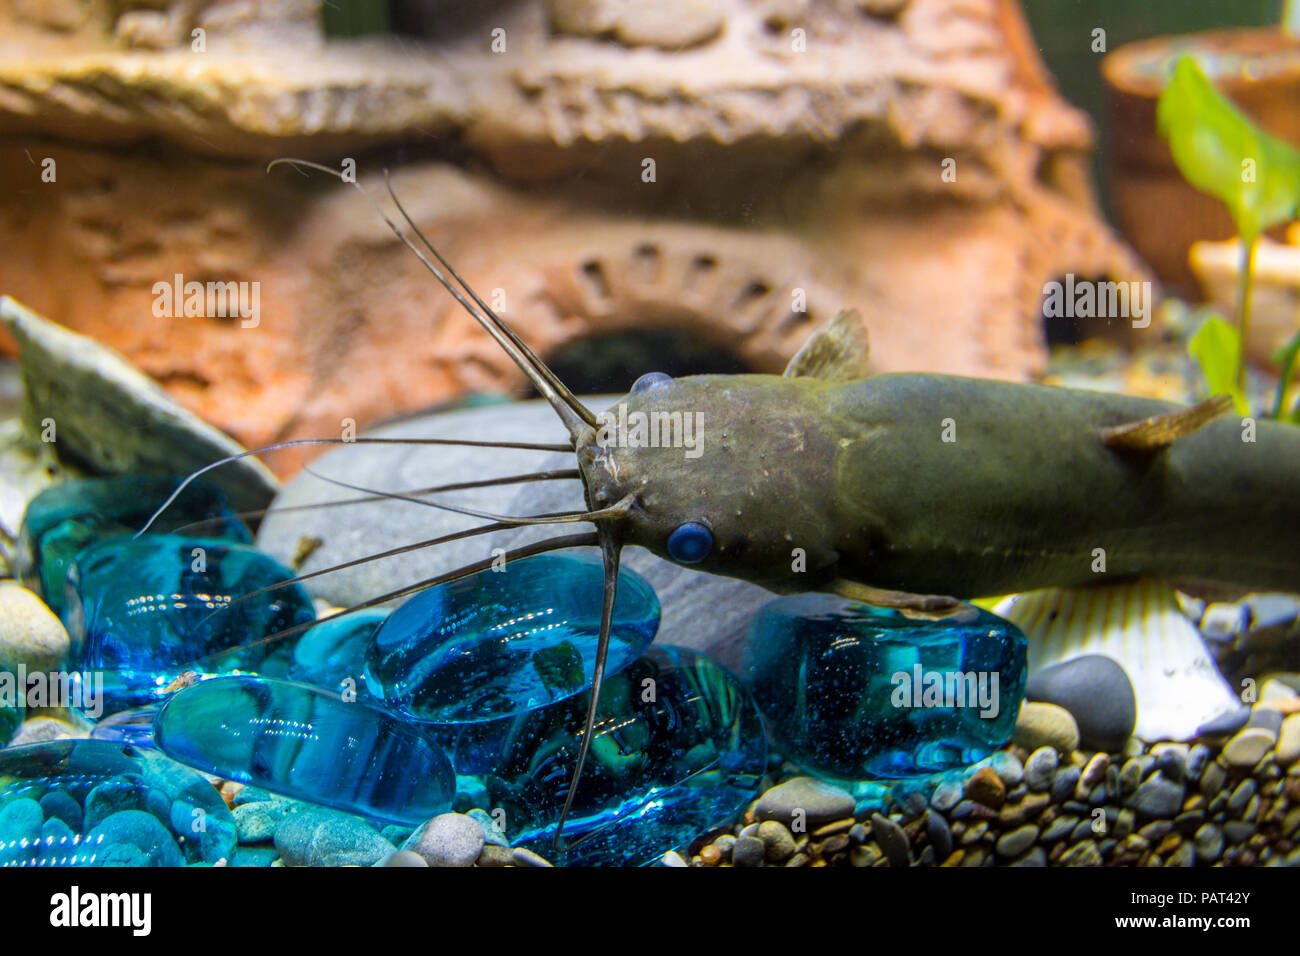 Head of a sackgrass catfish, close-up Stock Photo